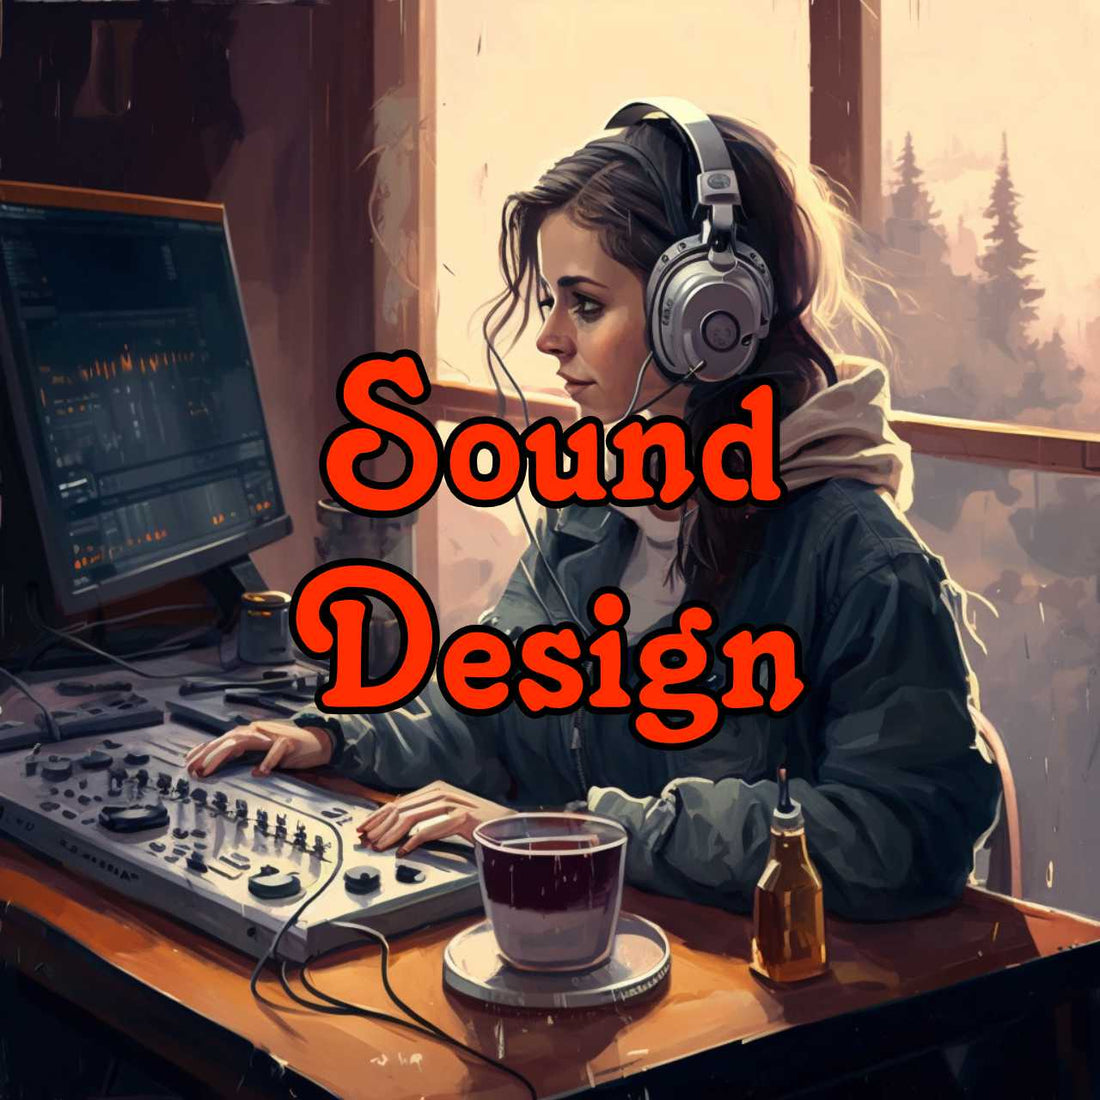 What is: Sound design?